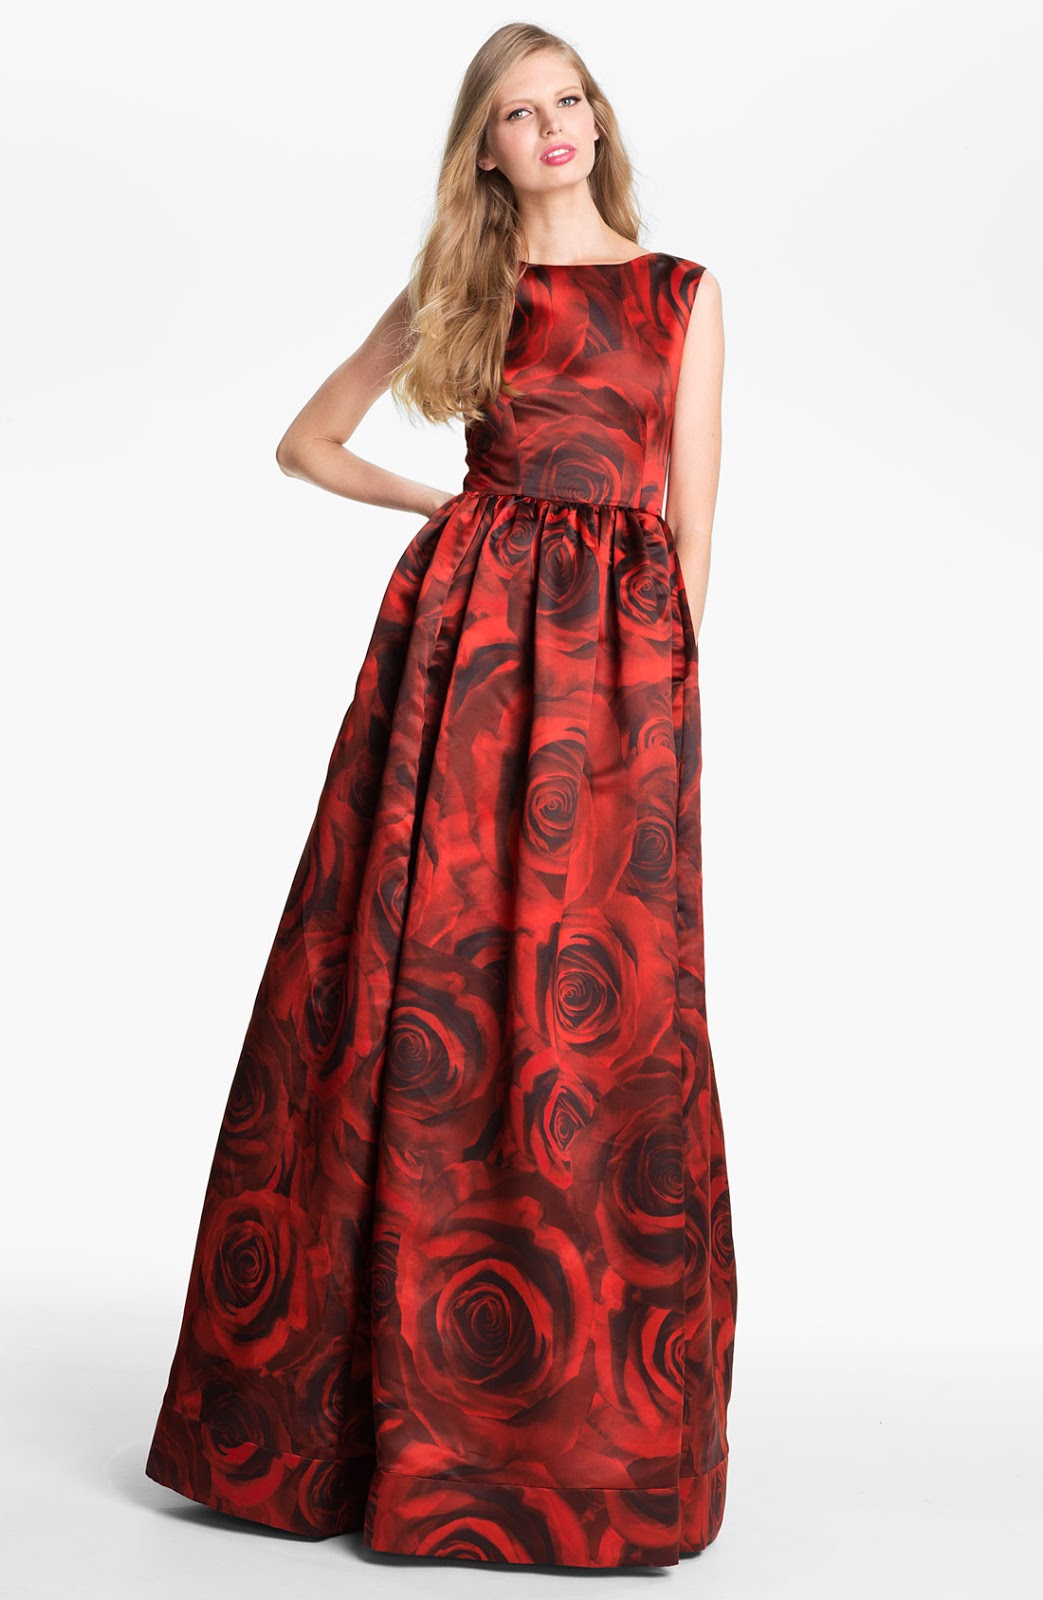 Brainy Mademoiselle: Rose Print Dress